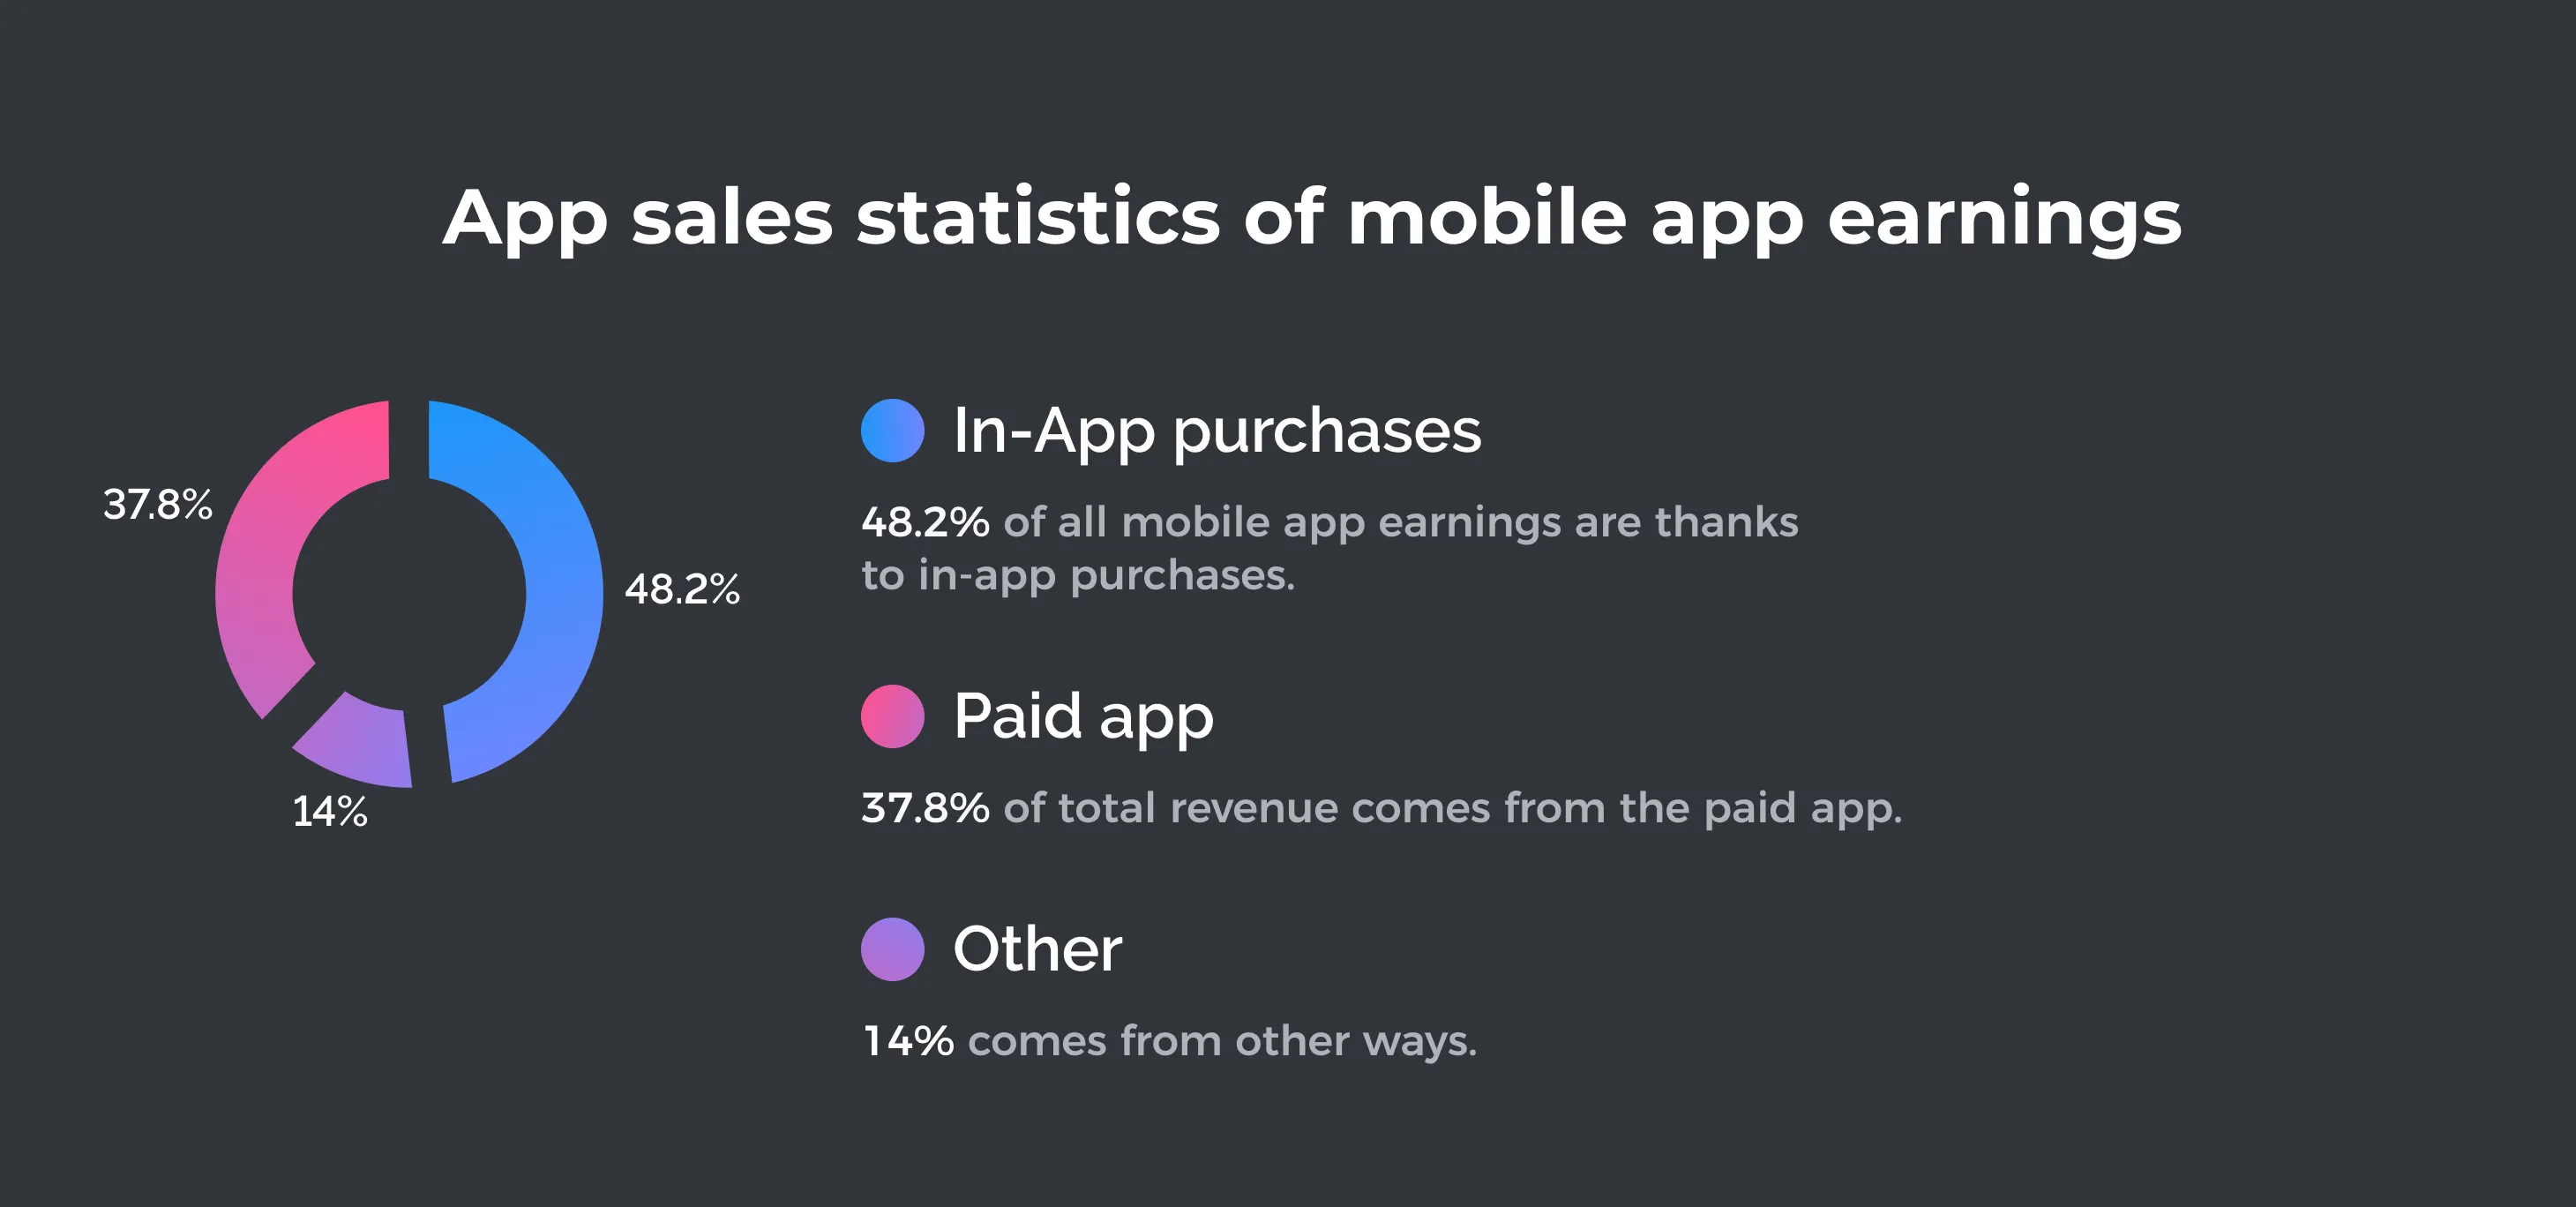 App sales statistics show